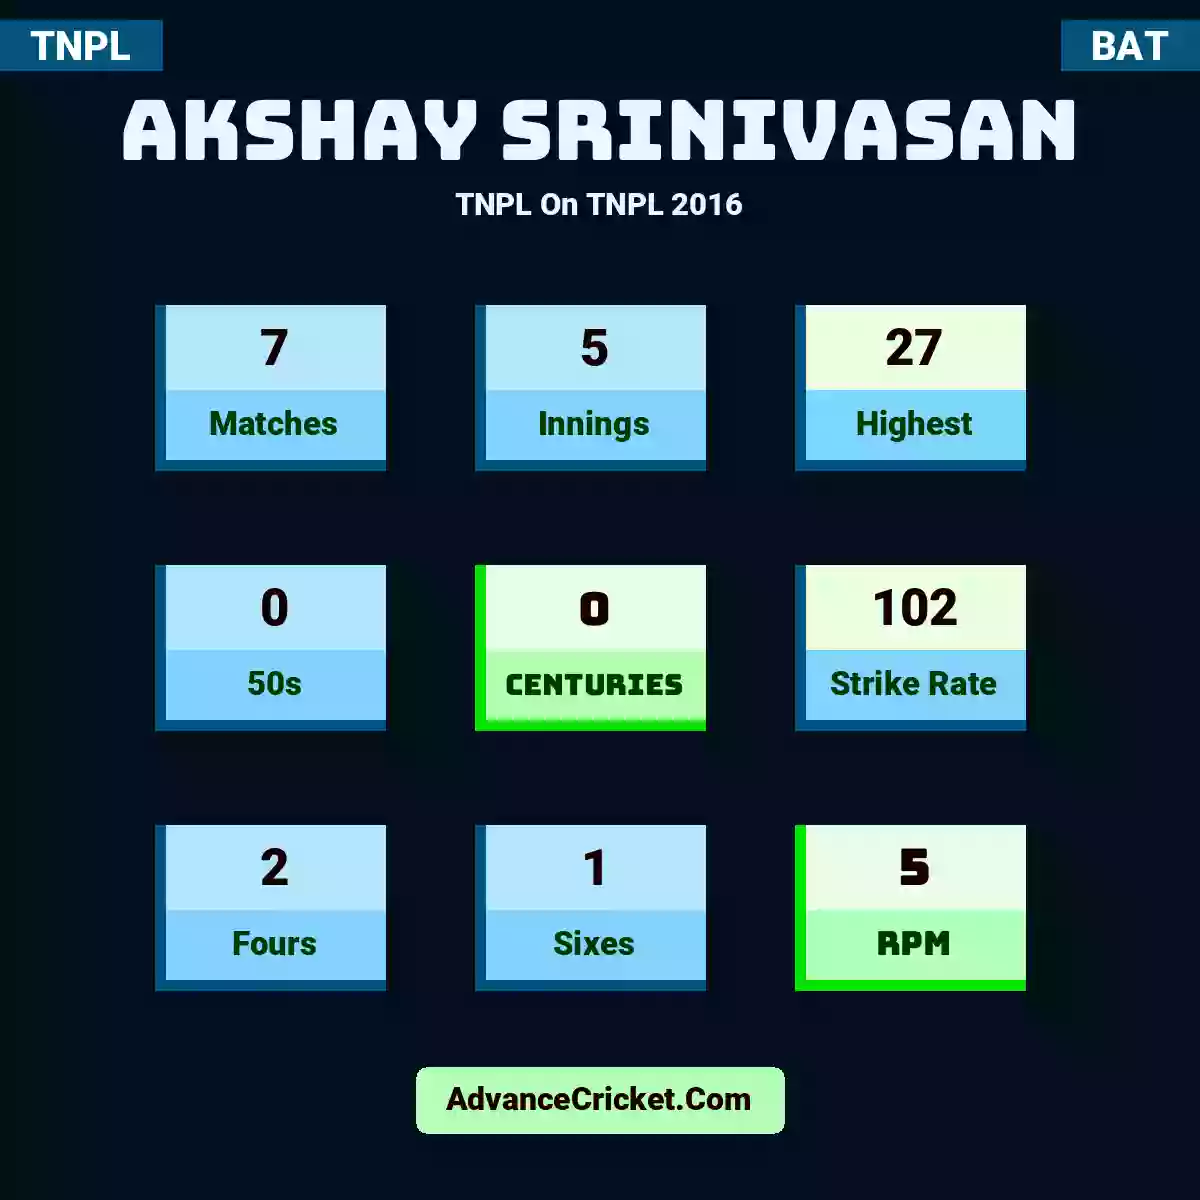 Akshay Srinivasan TNPL  On TNPL 2016, Akshay Srinivasan played 7 matches, scored 27 runs as highest, 0 half-centuries, and 0 centuries, with a strike rate of 102. A.Srinivasan hit 2 fours and 1 sixes, with an RPM of 5.